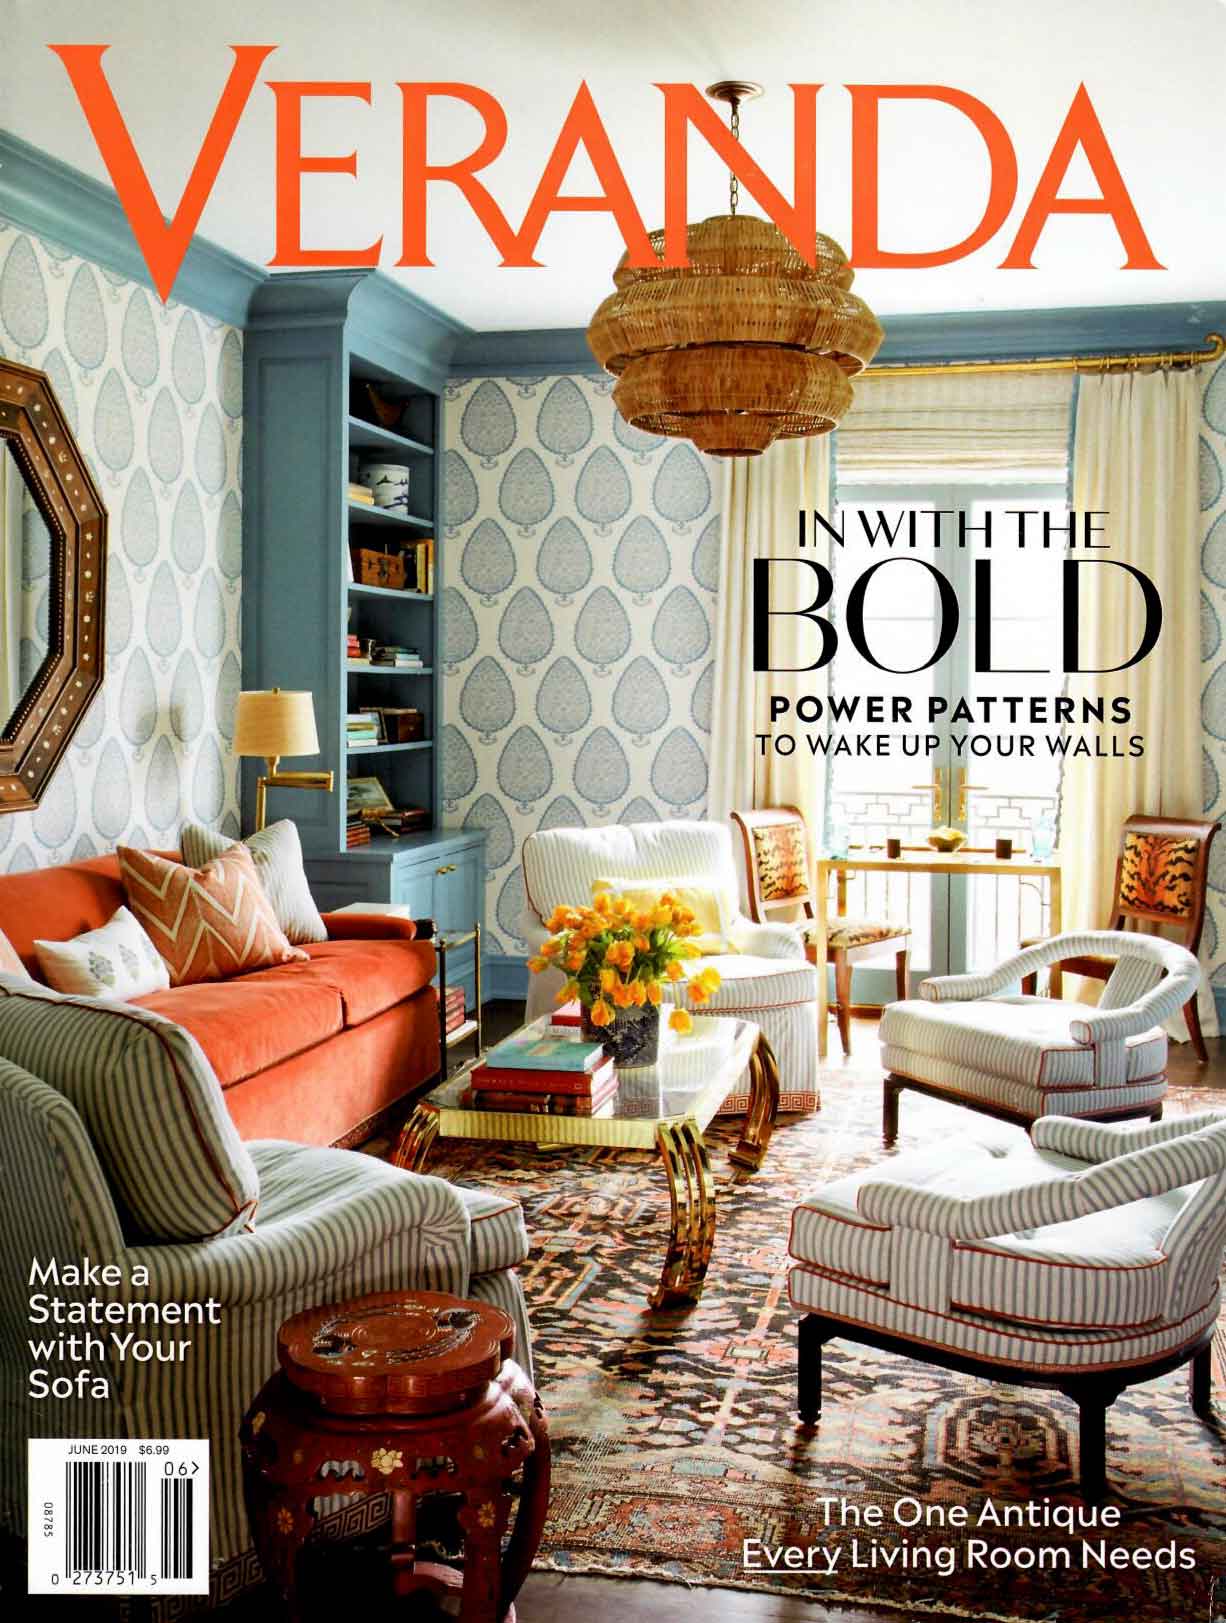 Veranda magazine Image